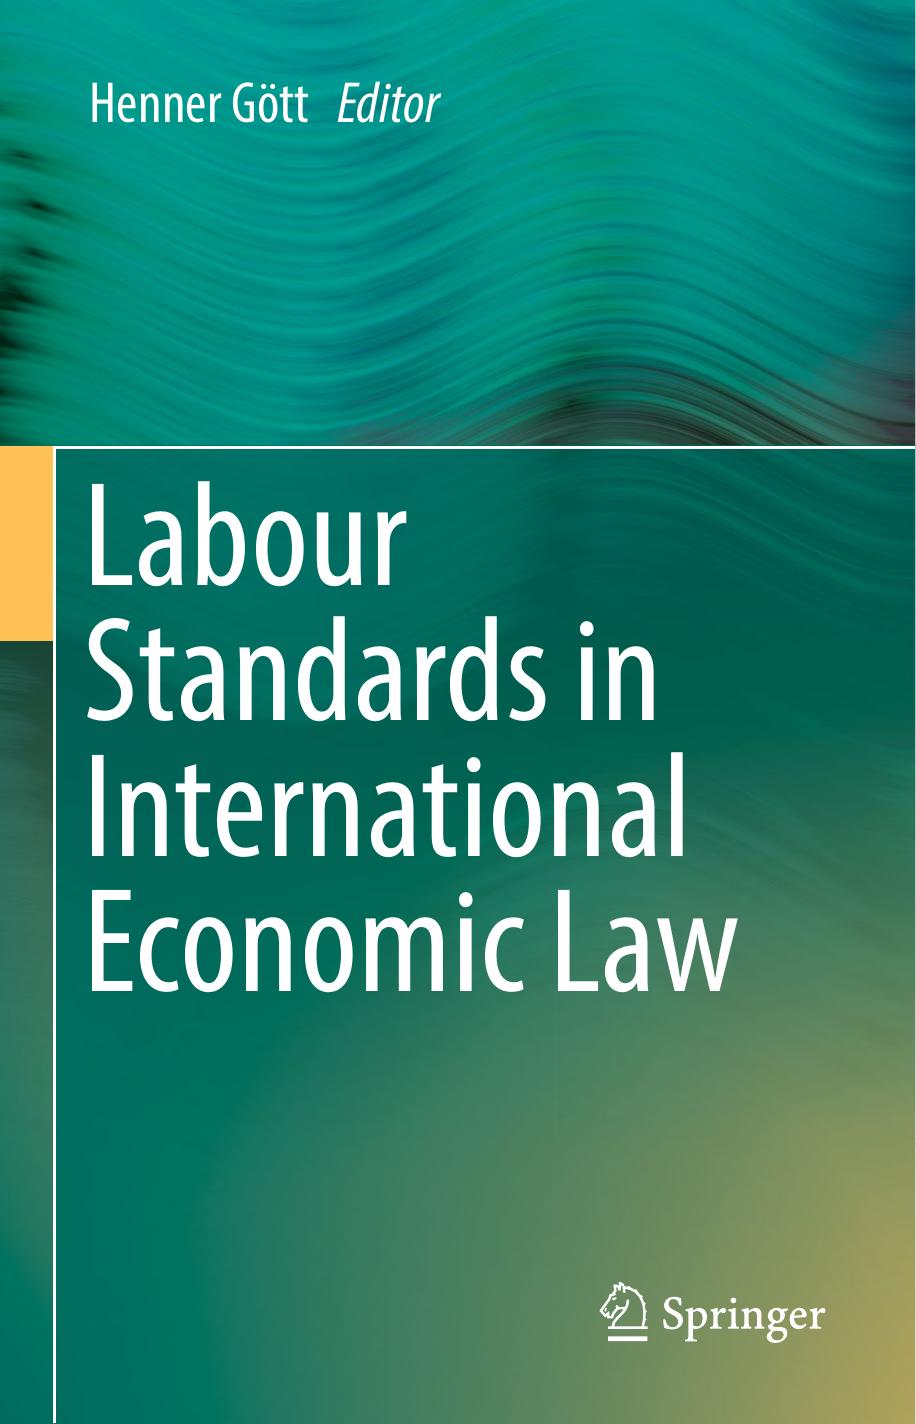 Labour Standards in International Economic Law 2018